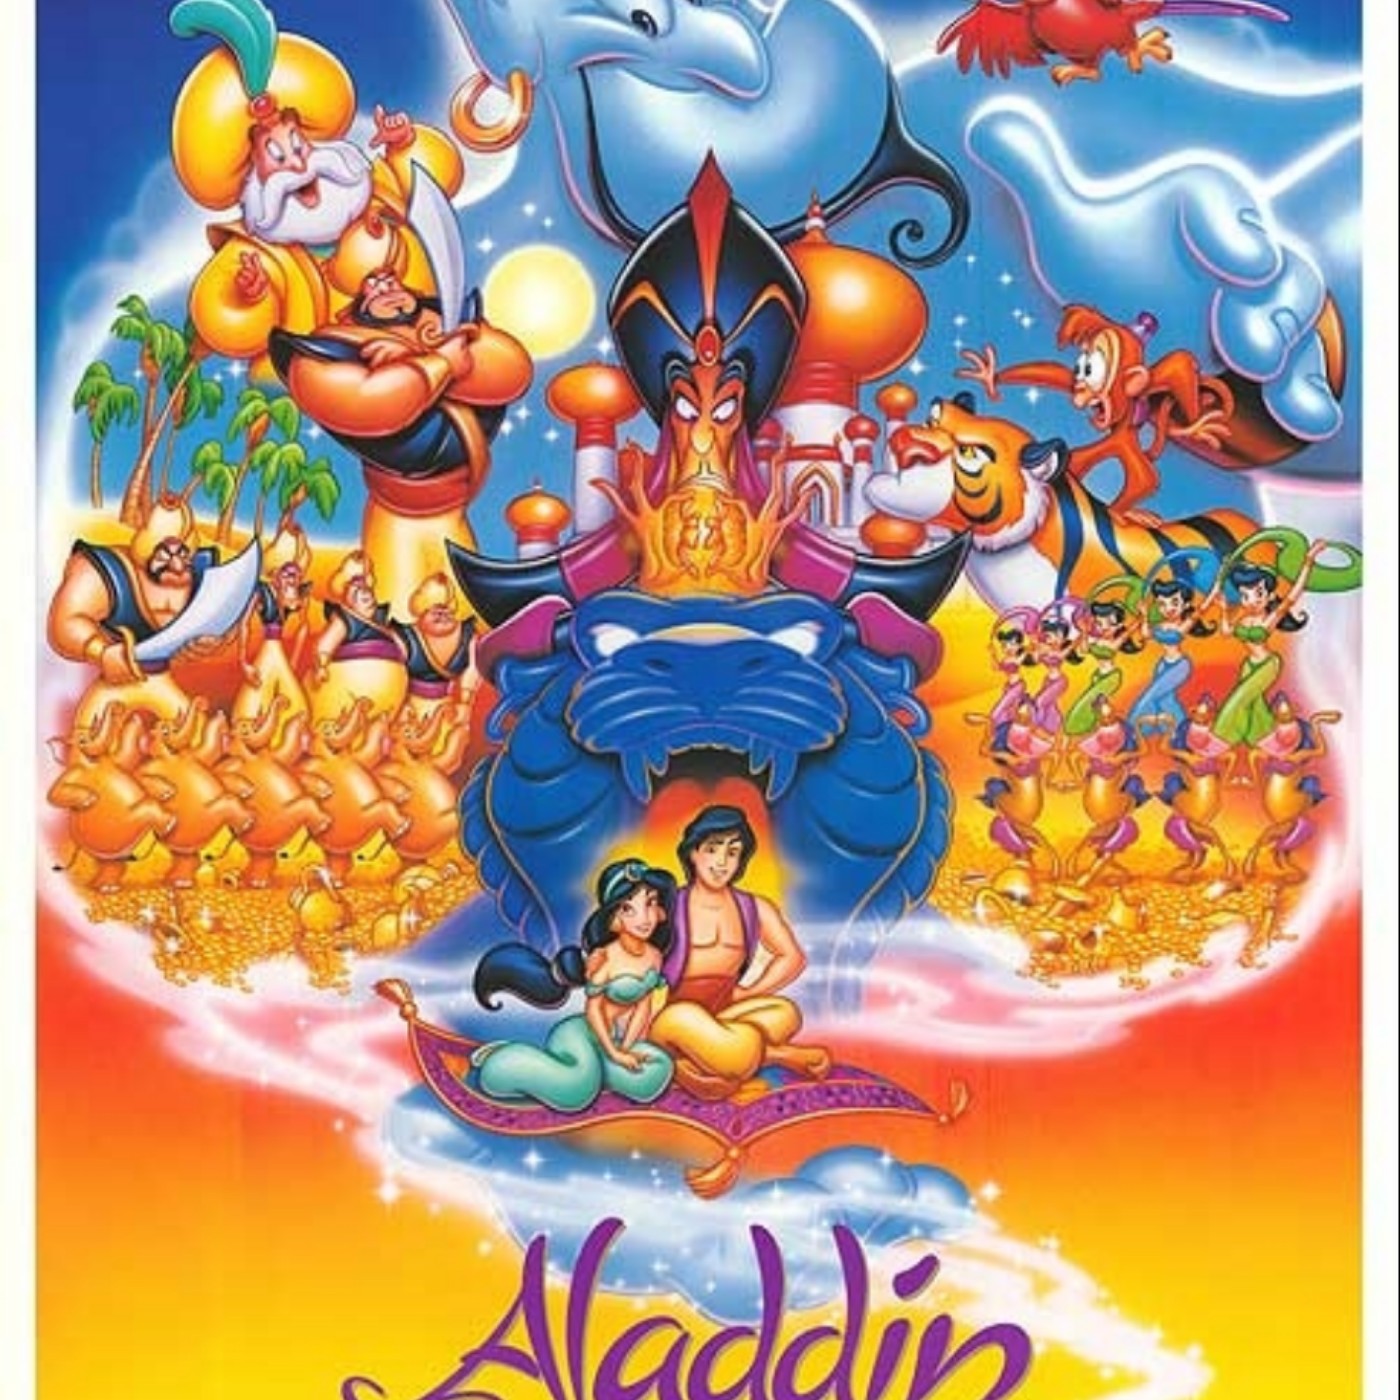 Aladdin Movie In Hindi Dubbed Free Download | Podcast on SoundOn